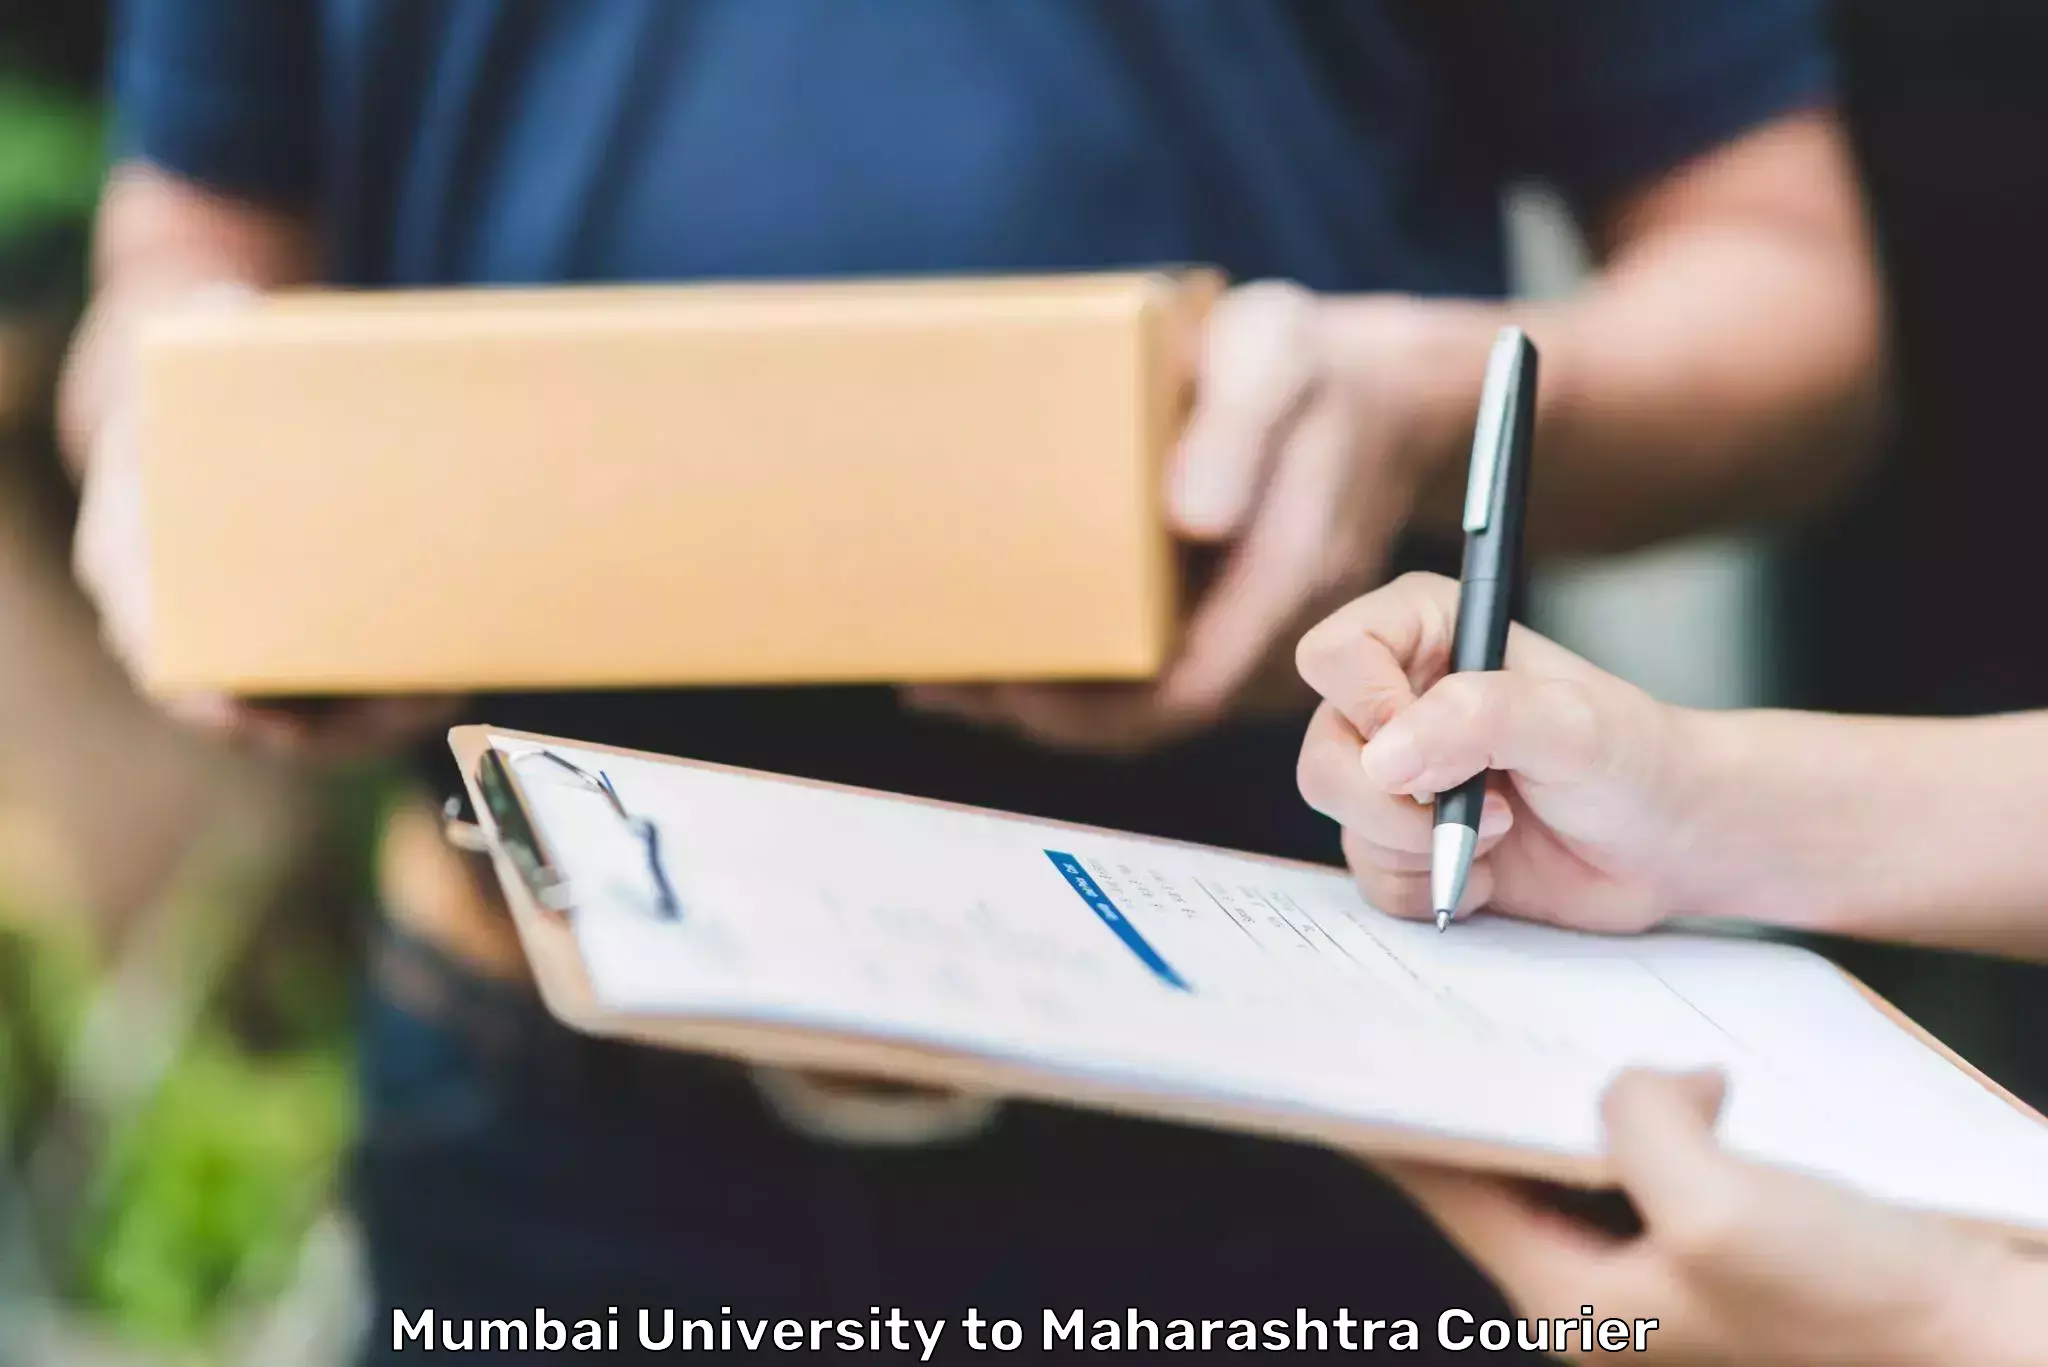 Reliable courier service Mumbai University to Chembur